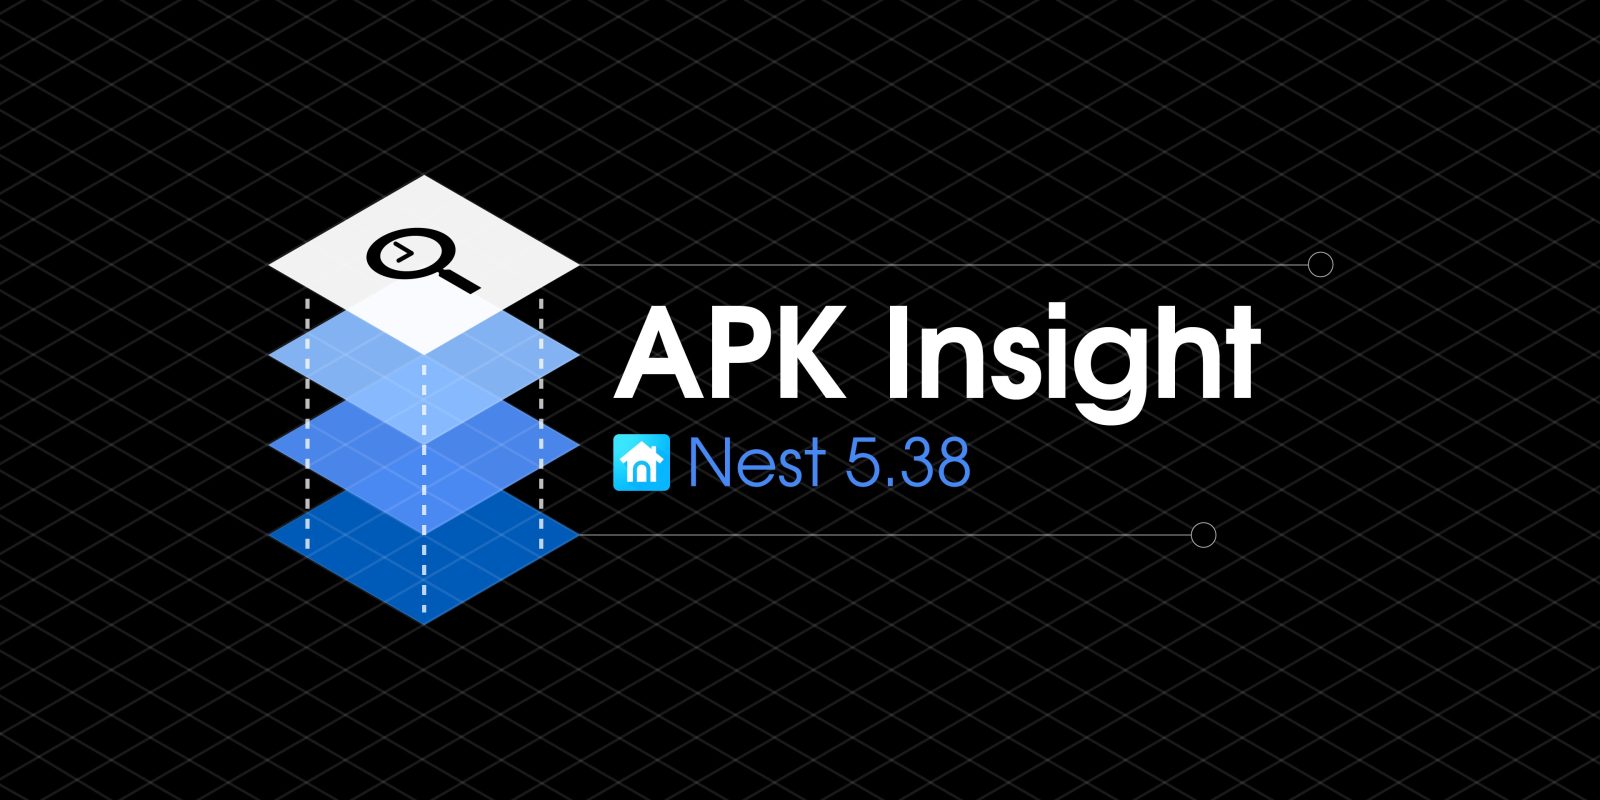 Nest 5.38 APK Insight